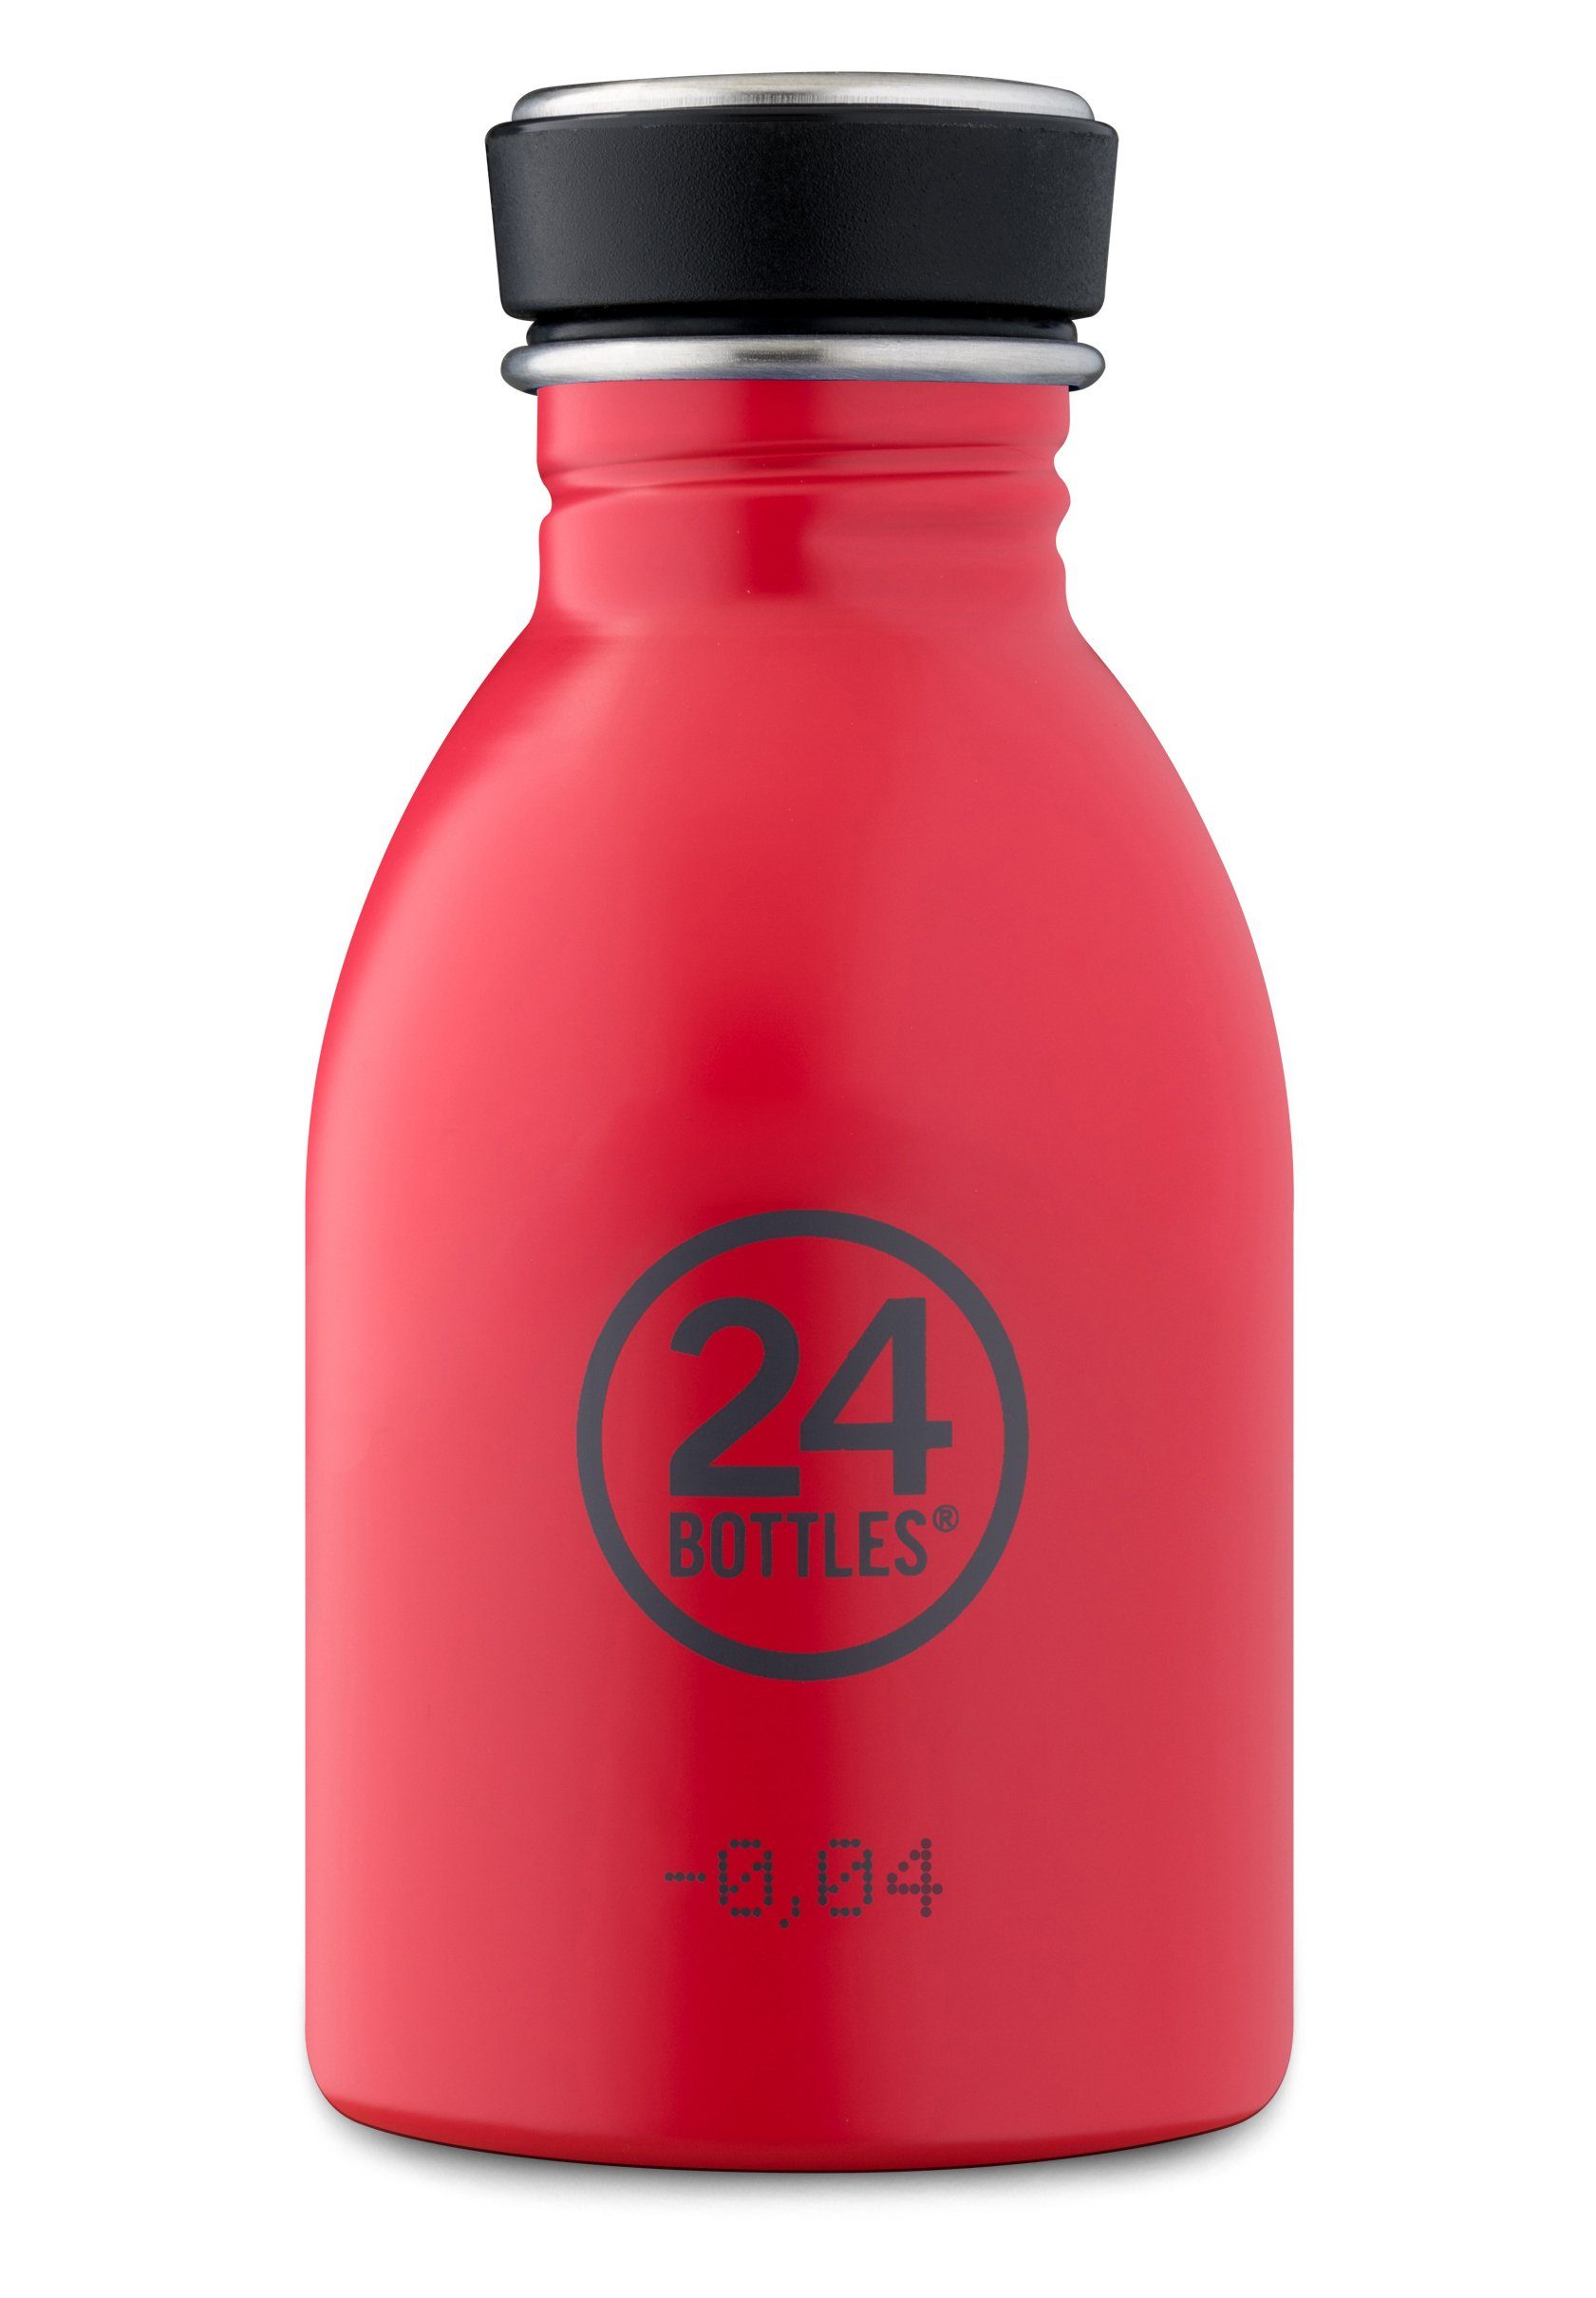 Bottles Hot Trinkflasche Red 24